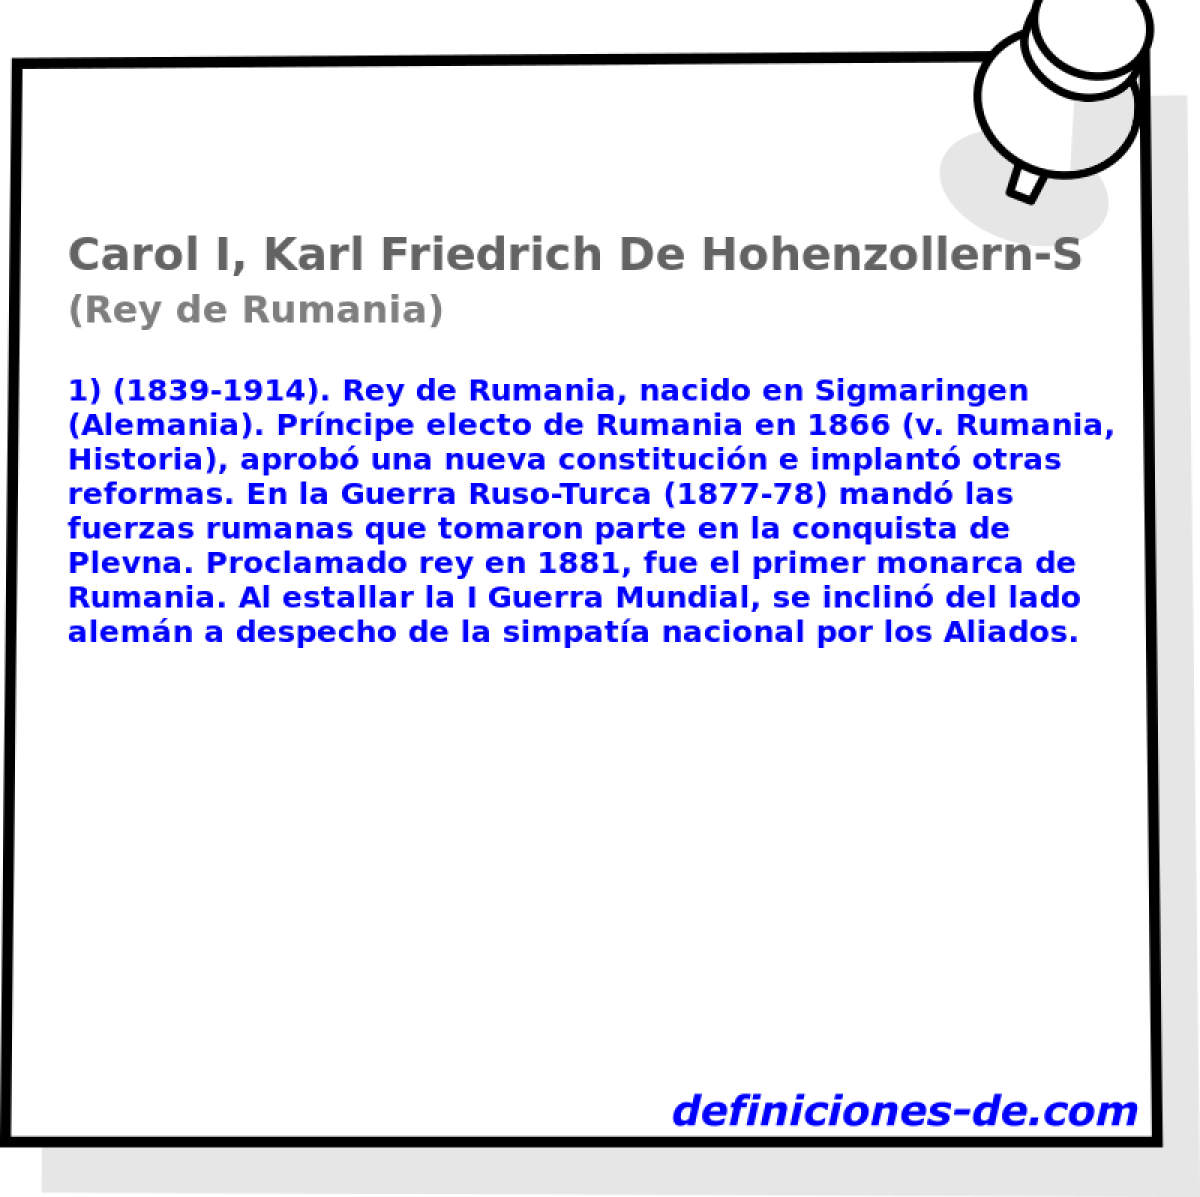 Carol I, Karl Friedrich De Hohenzollern-Sigmaringen (Rey de Rumania)